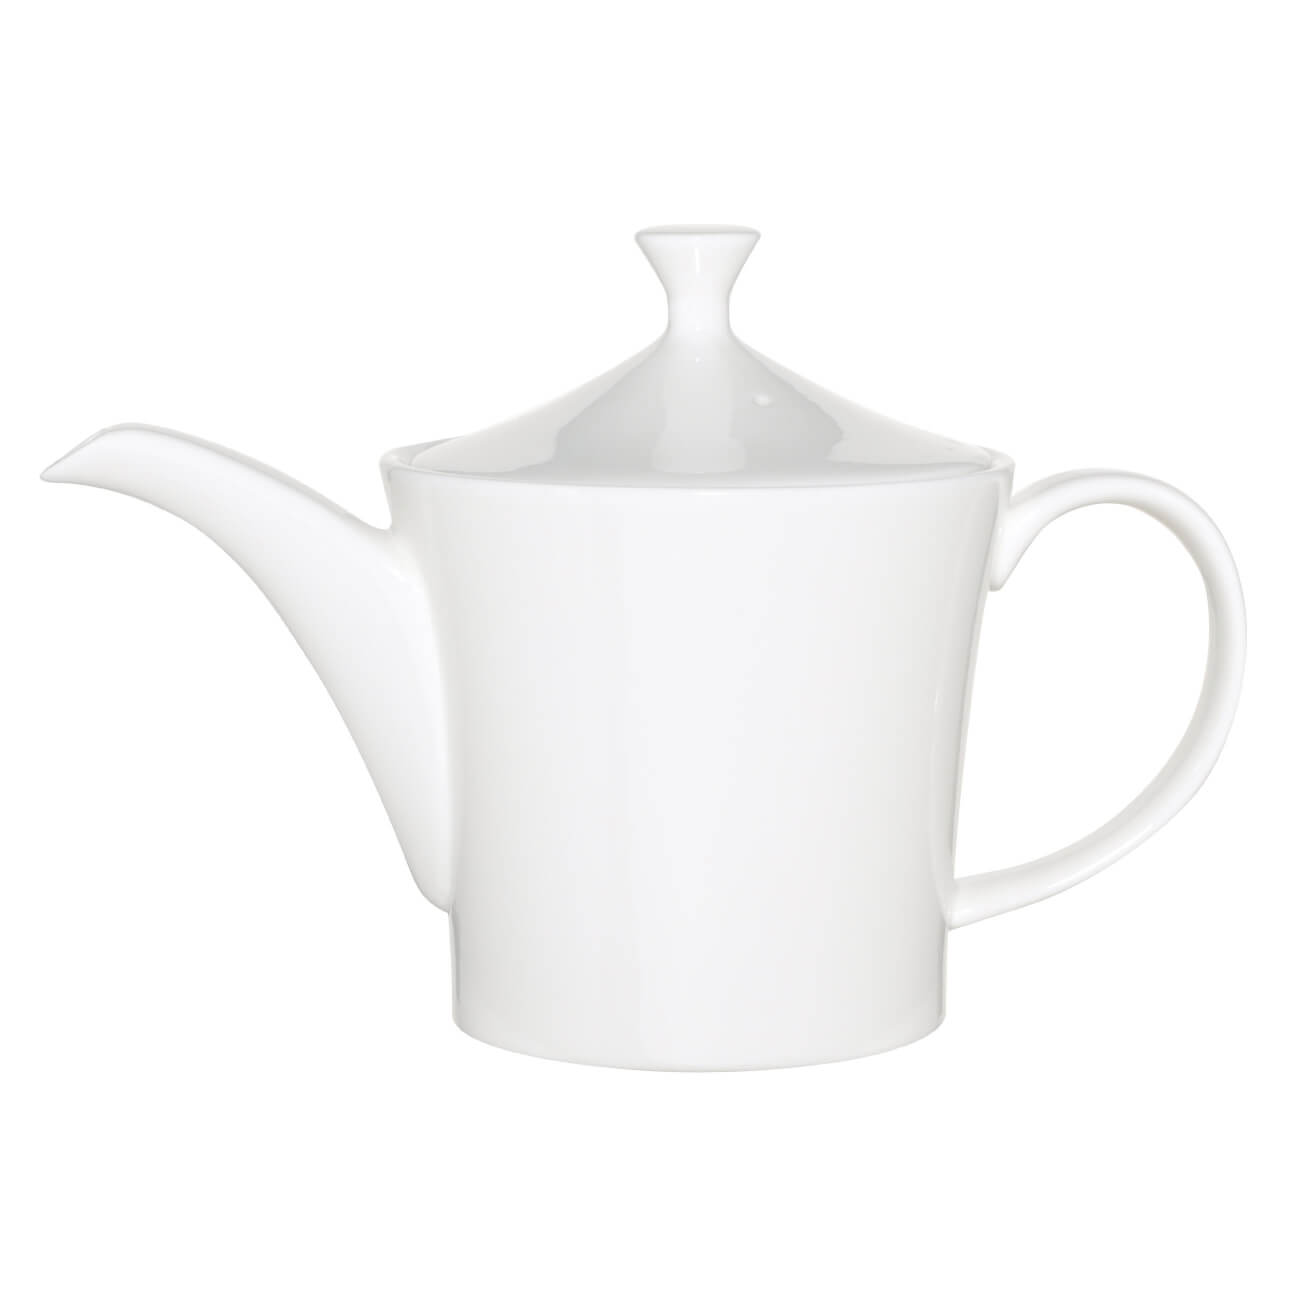 Чайник заварочный, 800 мл, фарфор F, белый, Ideal white чайник заварочный 1 2 л фарфор f с серебристым кантом ирисы antarctica flowers